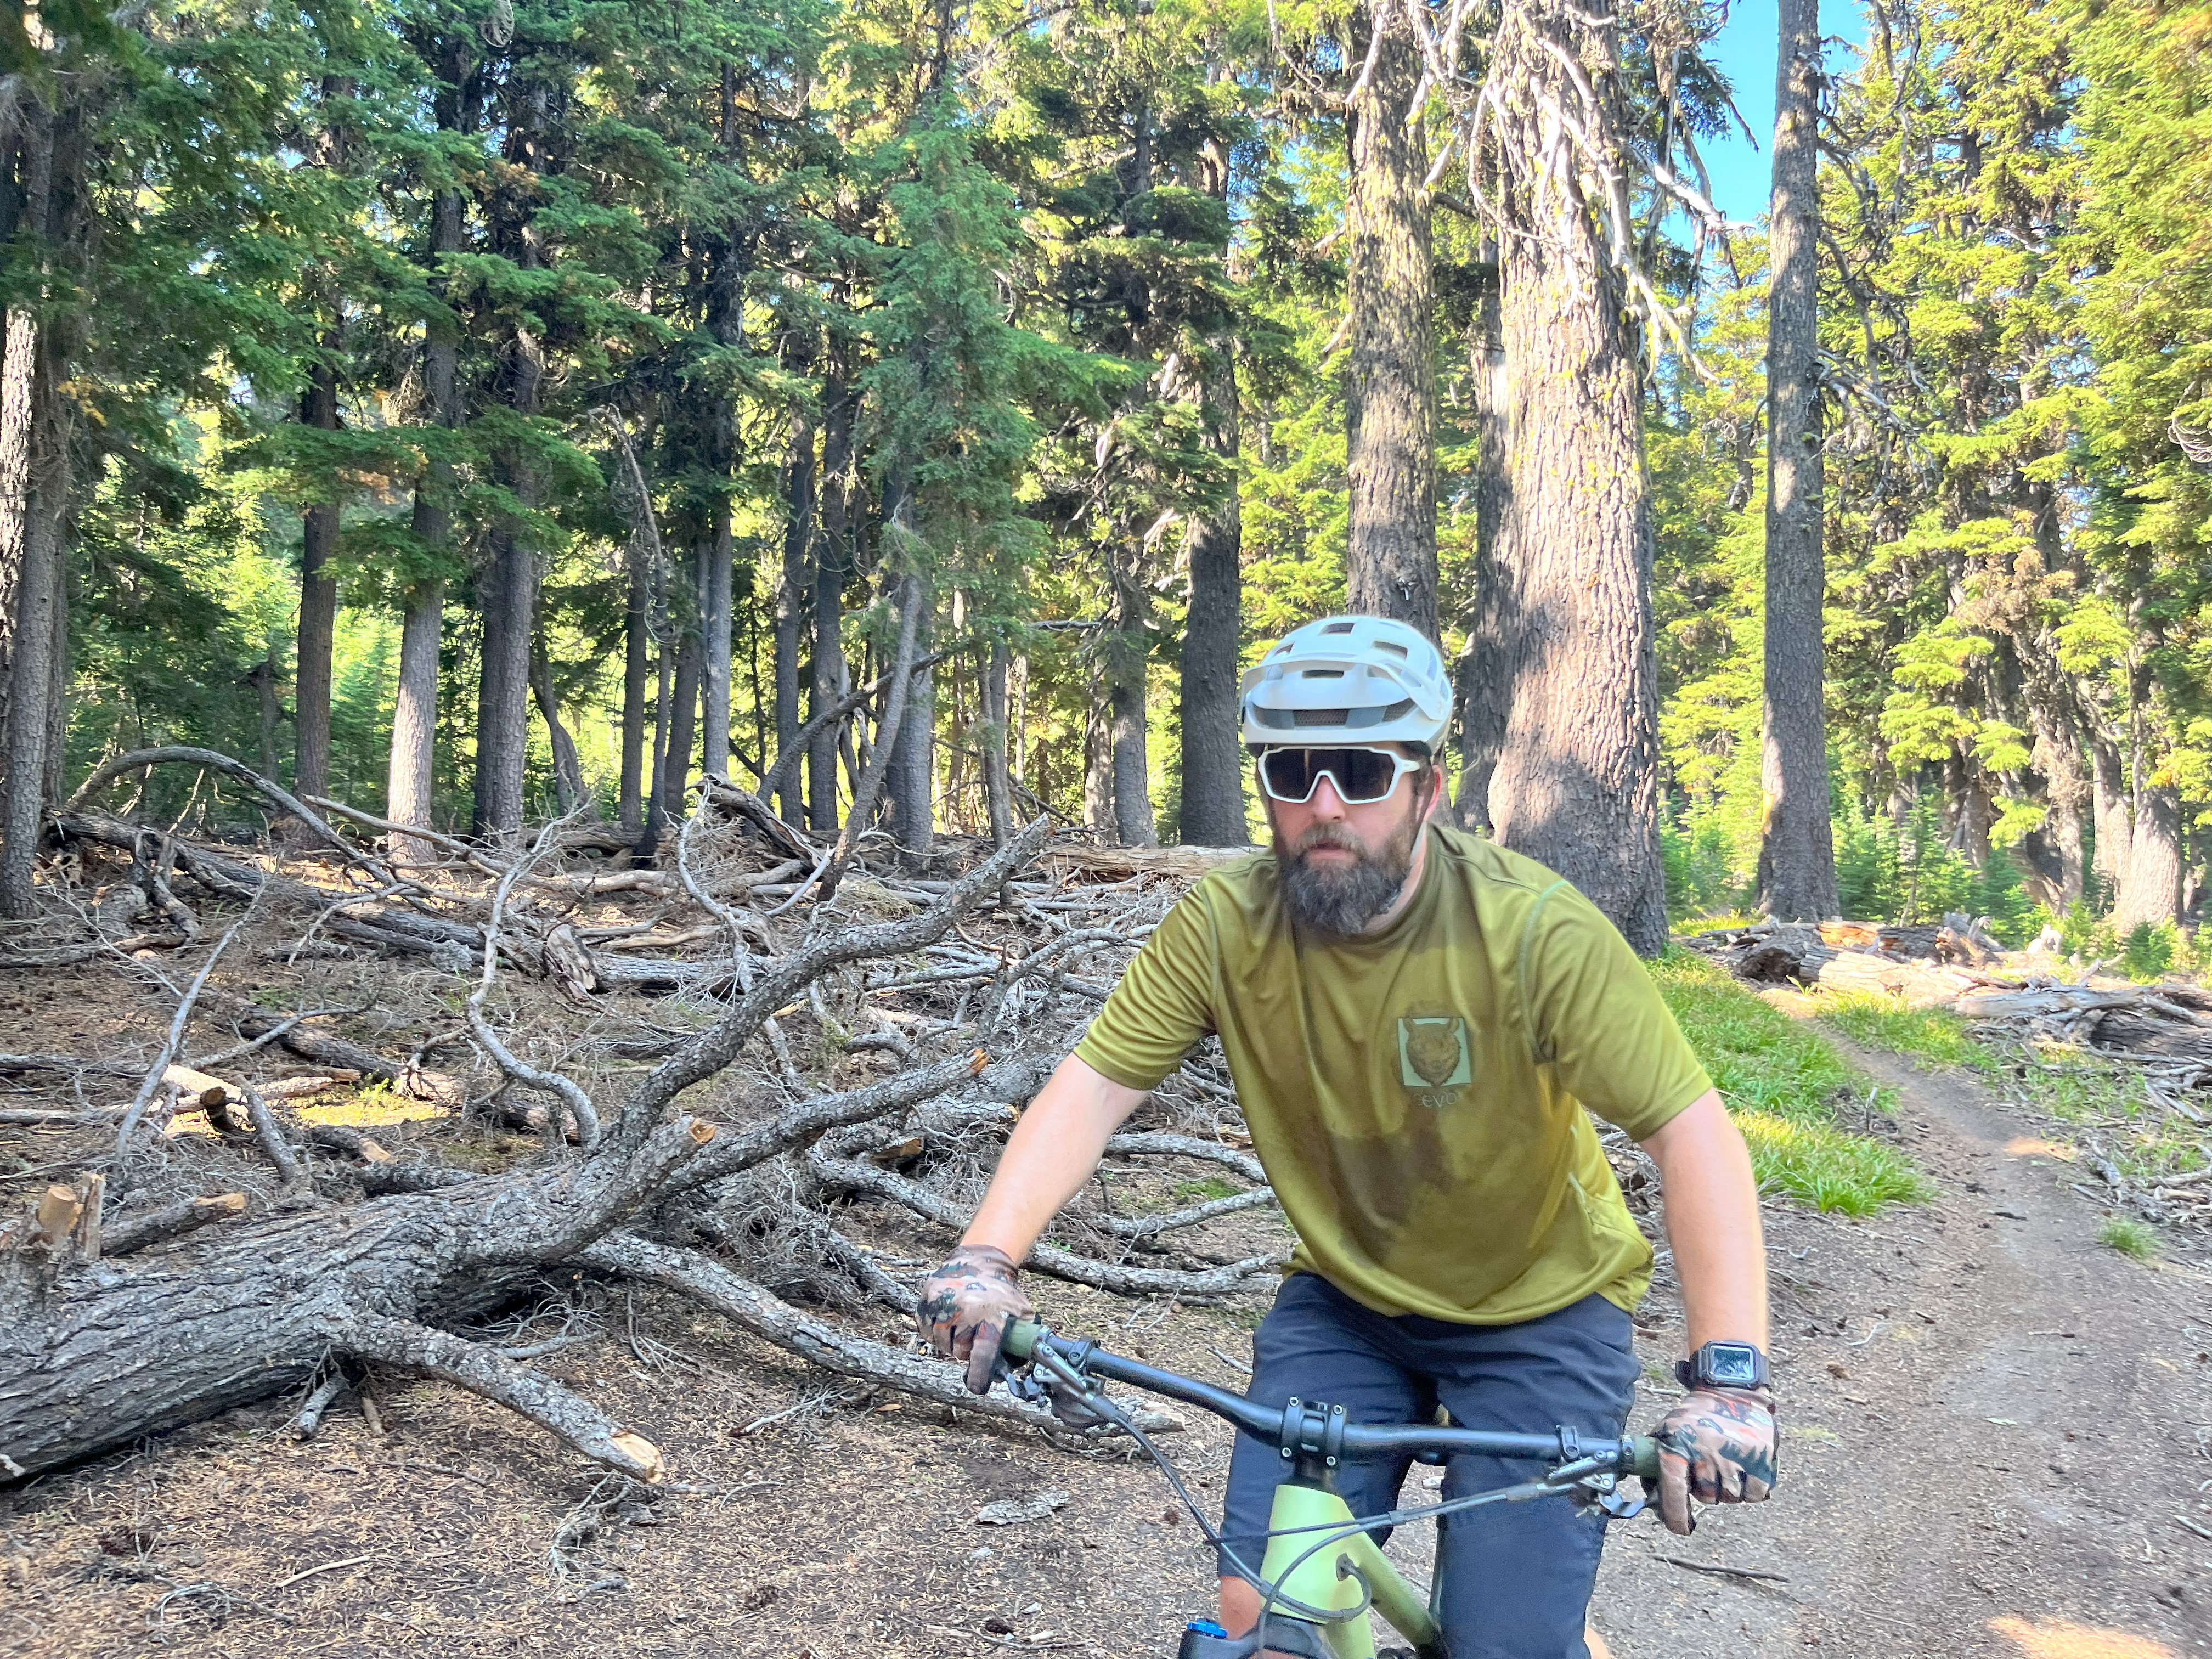 Mountain biking gear review: SMITH sunglasses dominate the